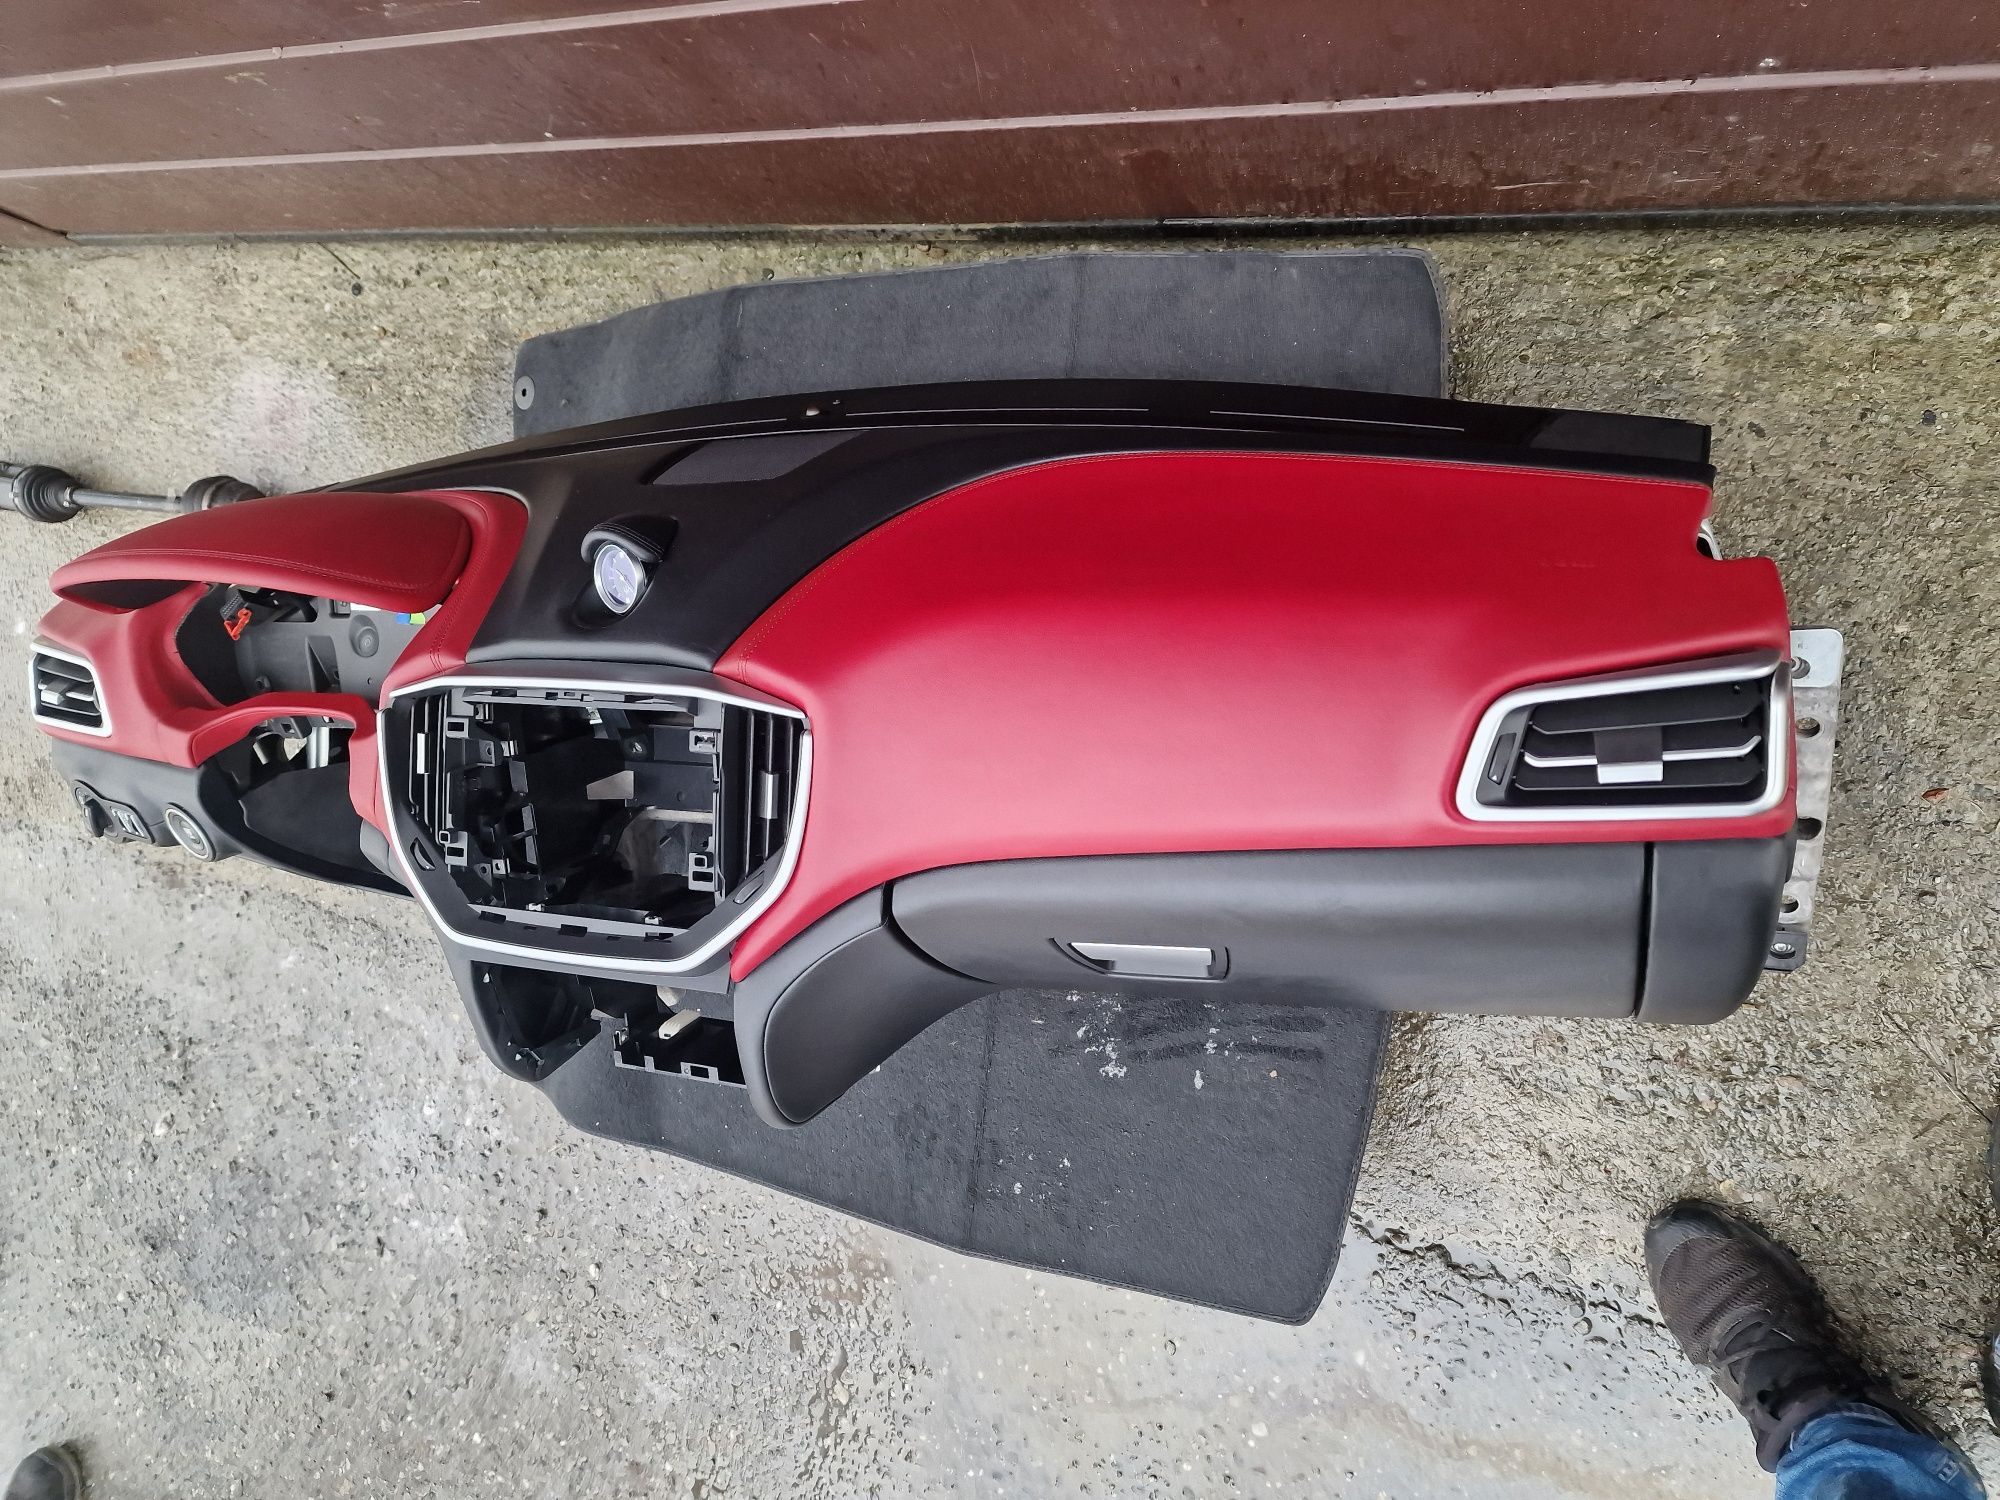 Maserati ghibli Deska konsola airbag pasy przod oryginal nie regenerow